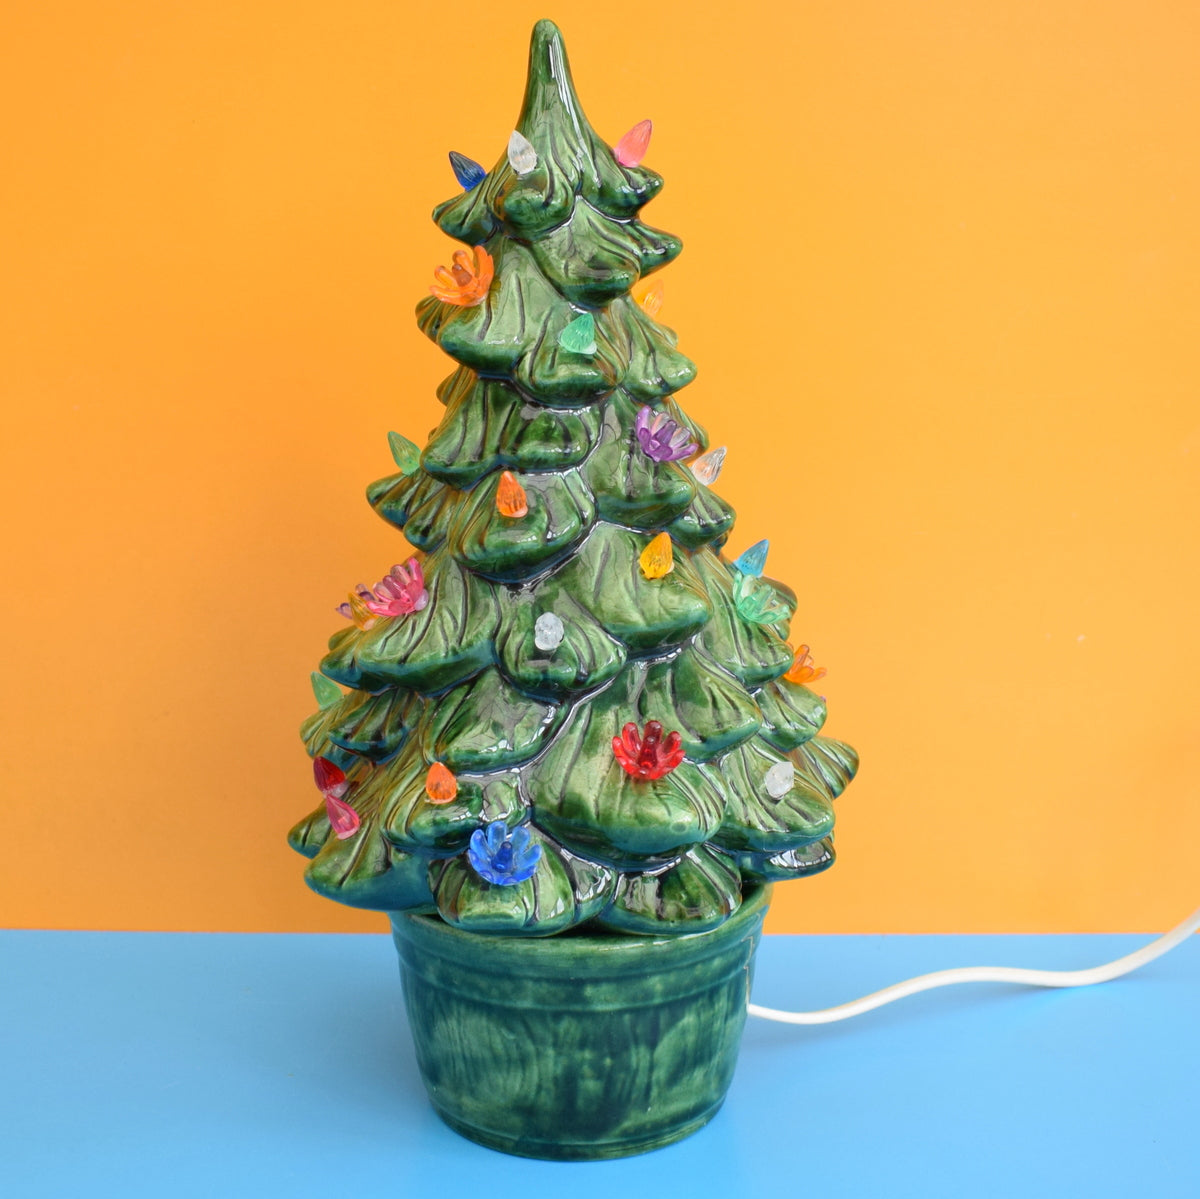 Vintage Ceramic Christmas Tree Light - Green With Rainbow Bulbs